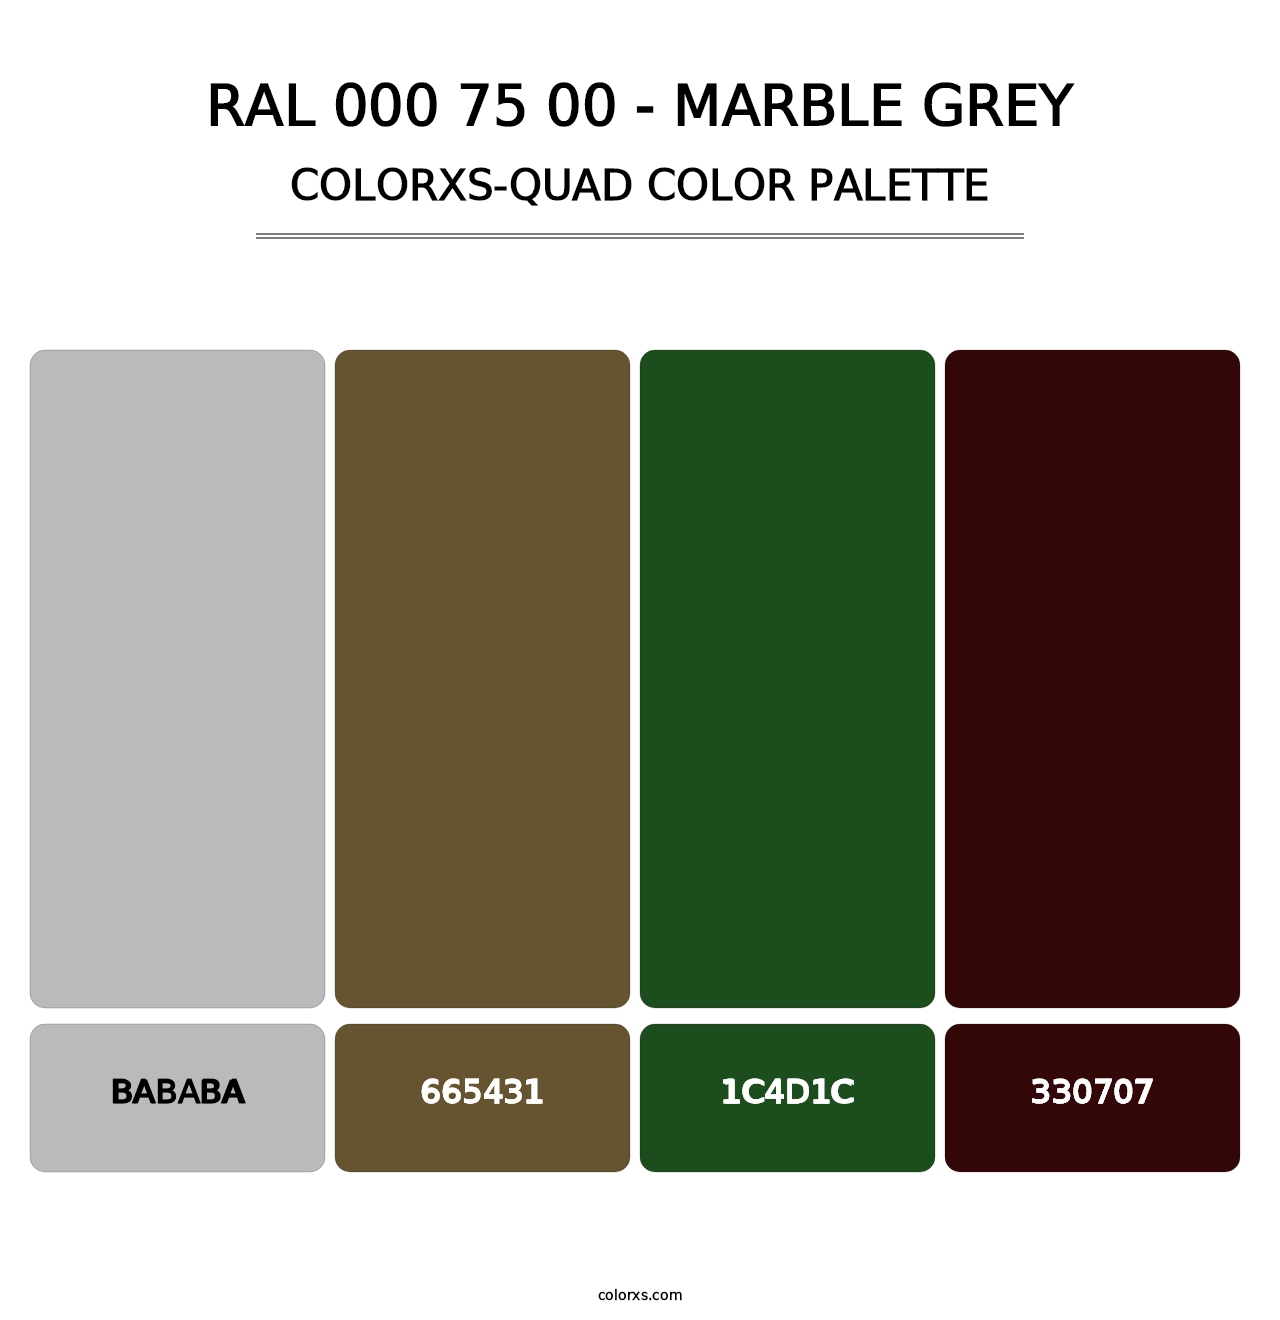 RAL 000 75 00 - Marble Grey - Colorxs Quad Palette